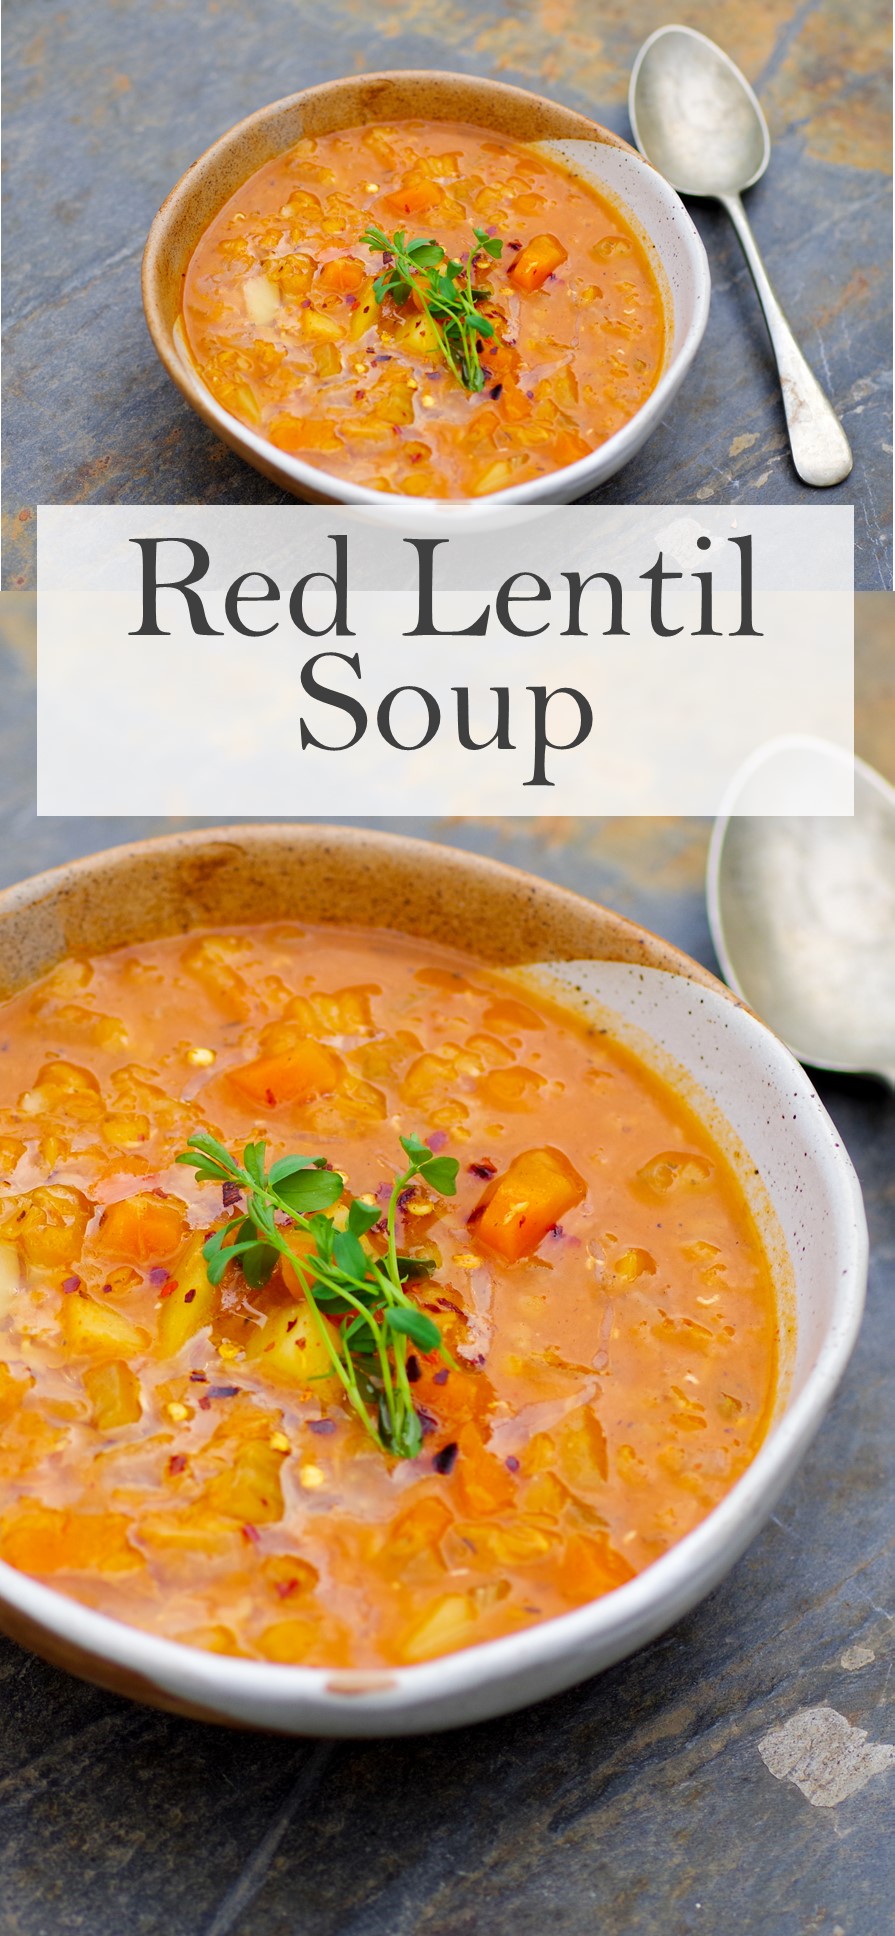 Red Lentil Soup |Euphoric Vegan